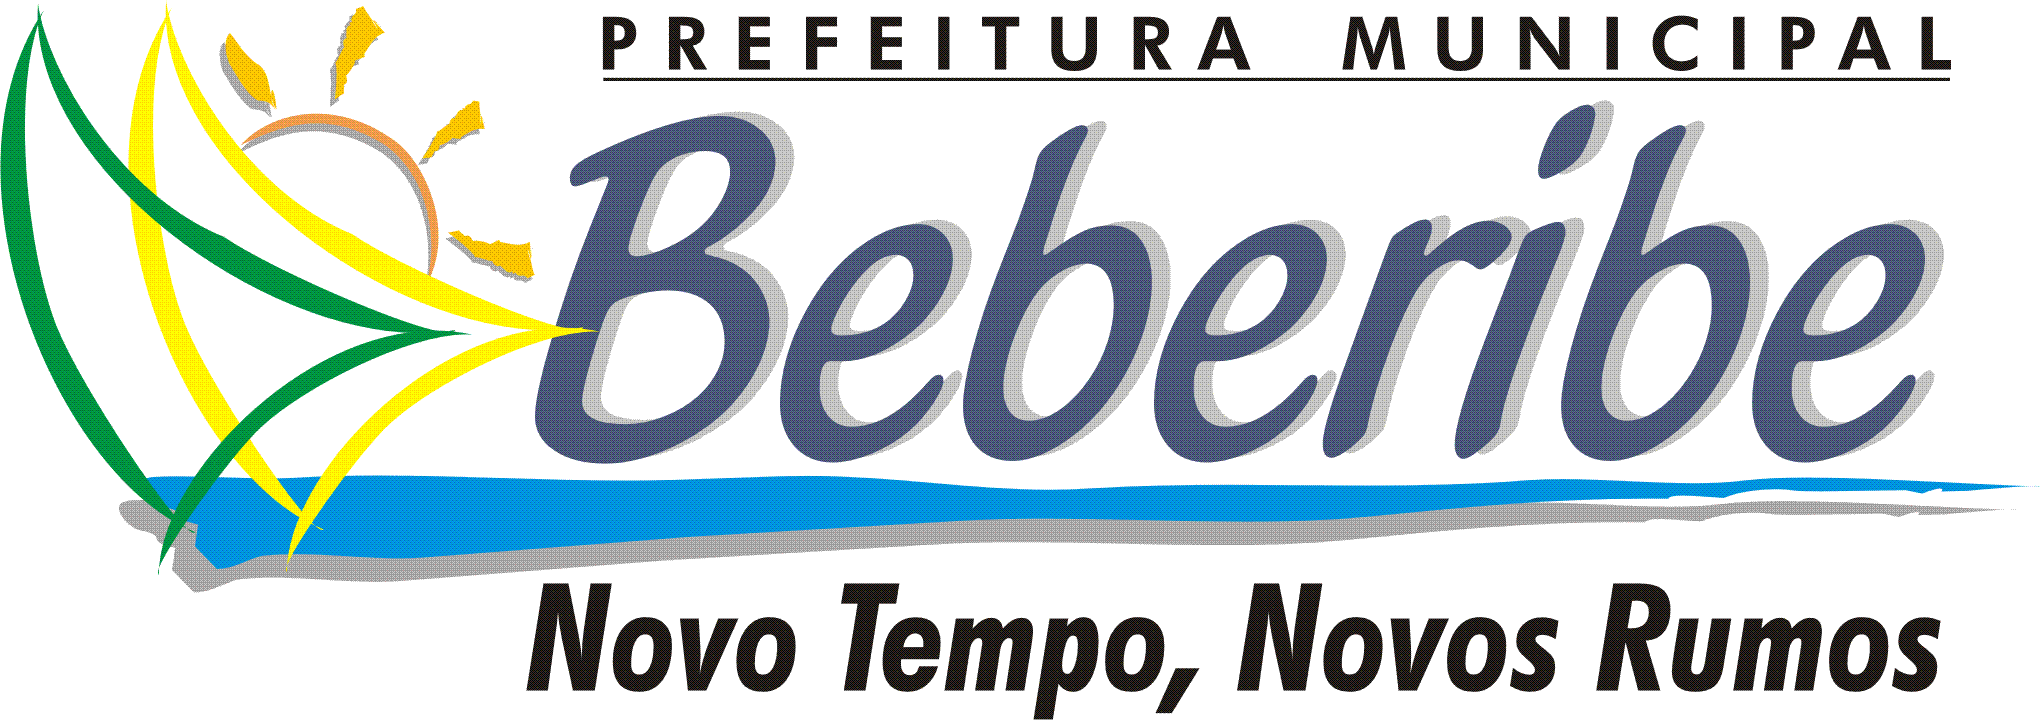 Municipal City  Hall of Beberibe